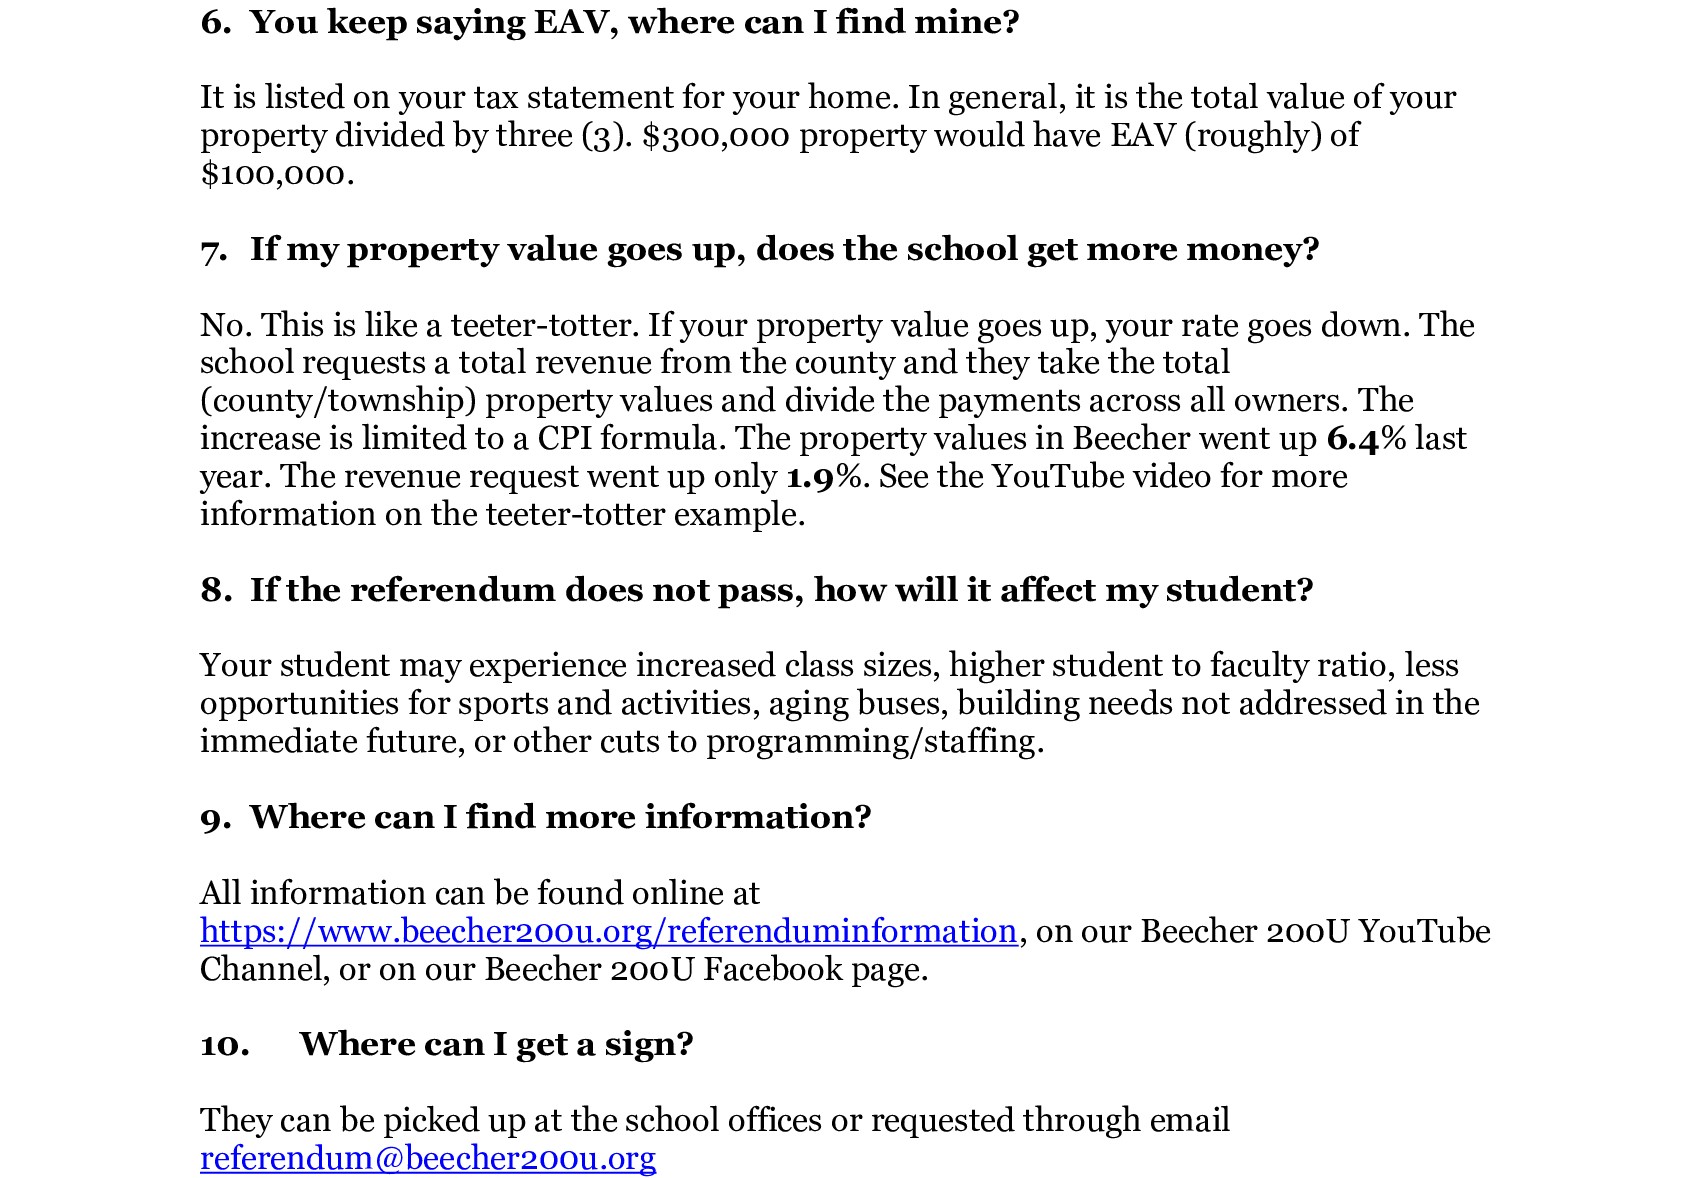 Referendum FAQ